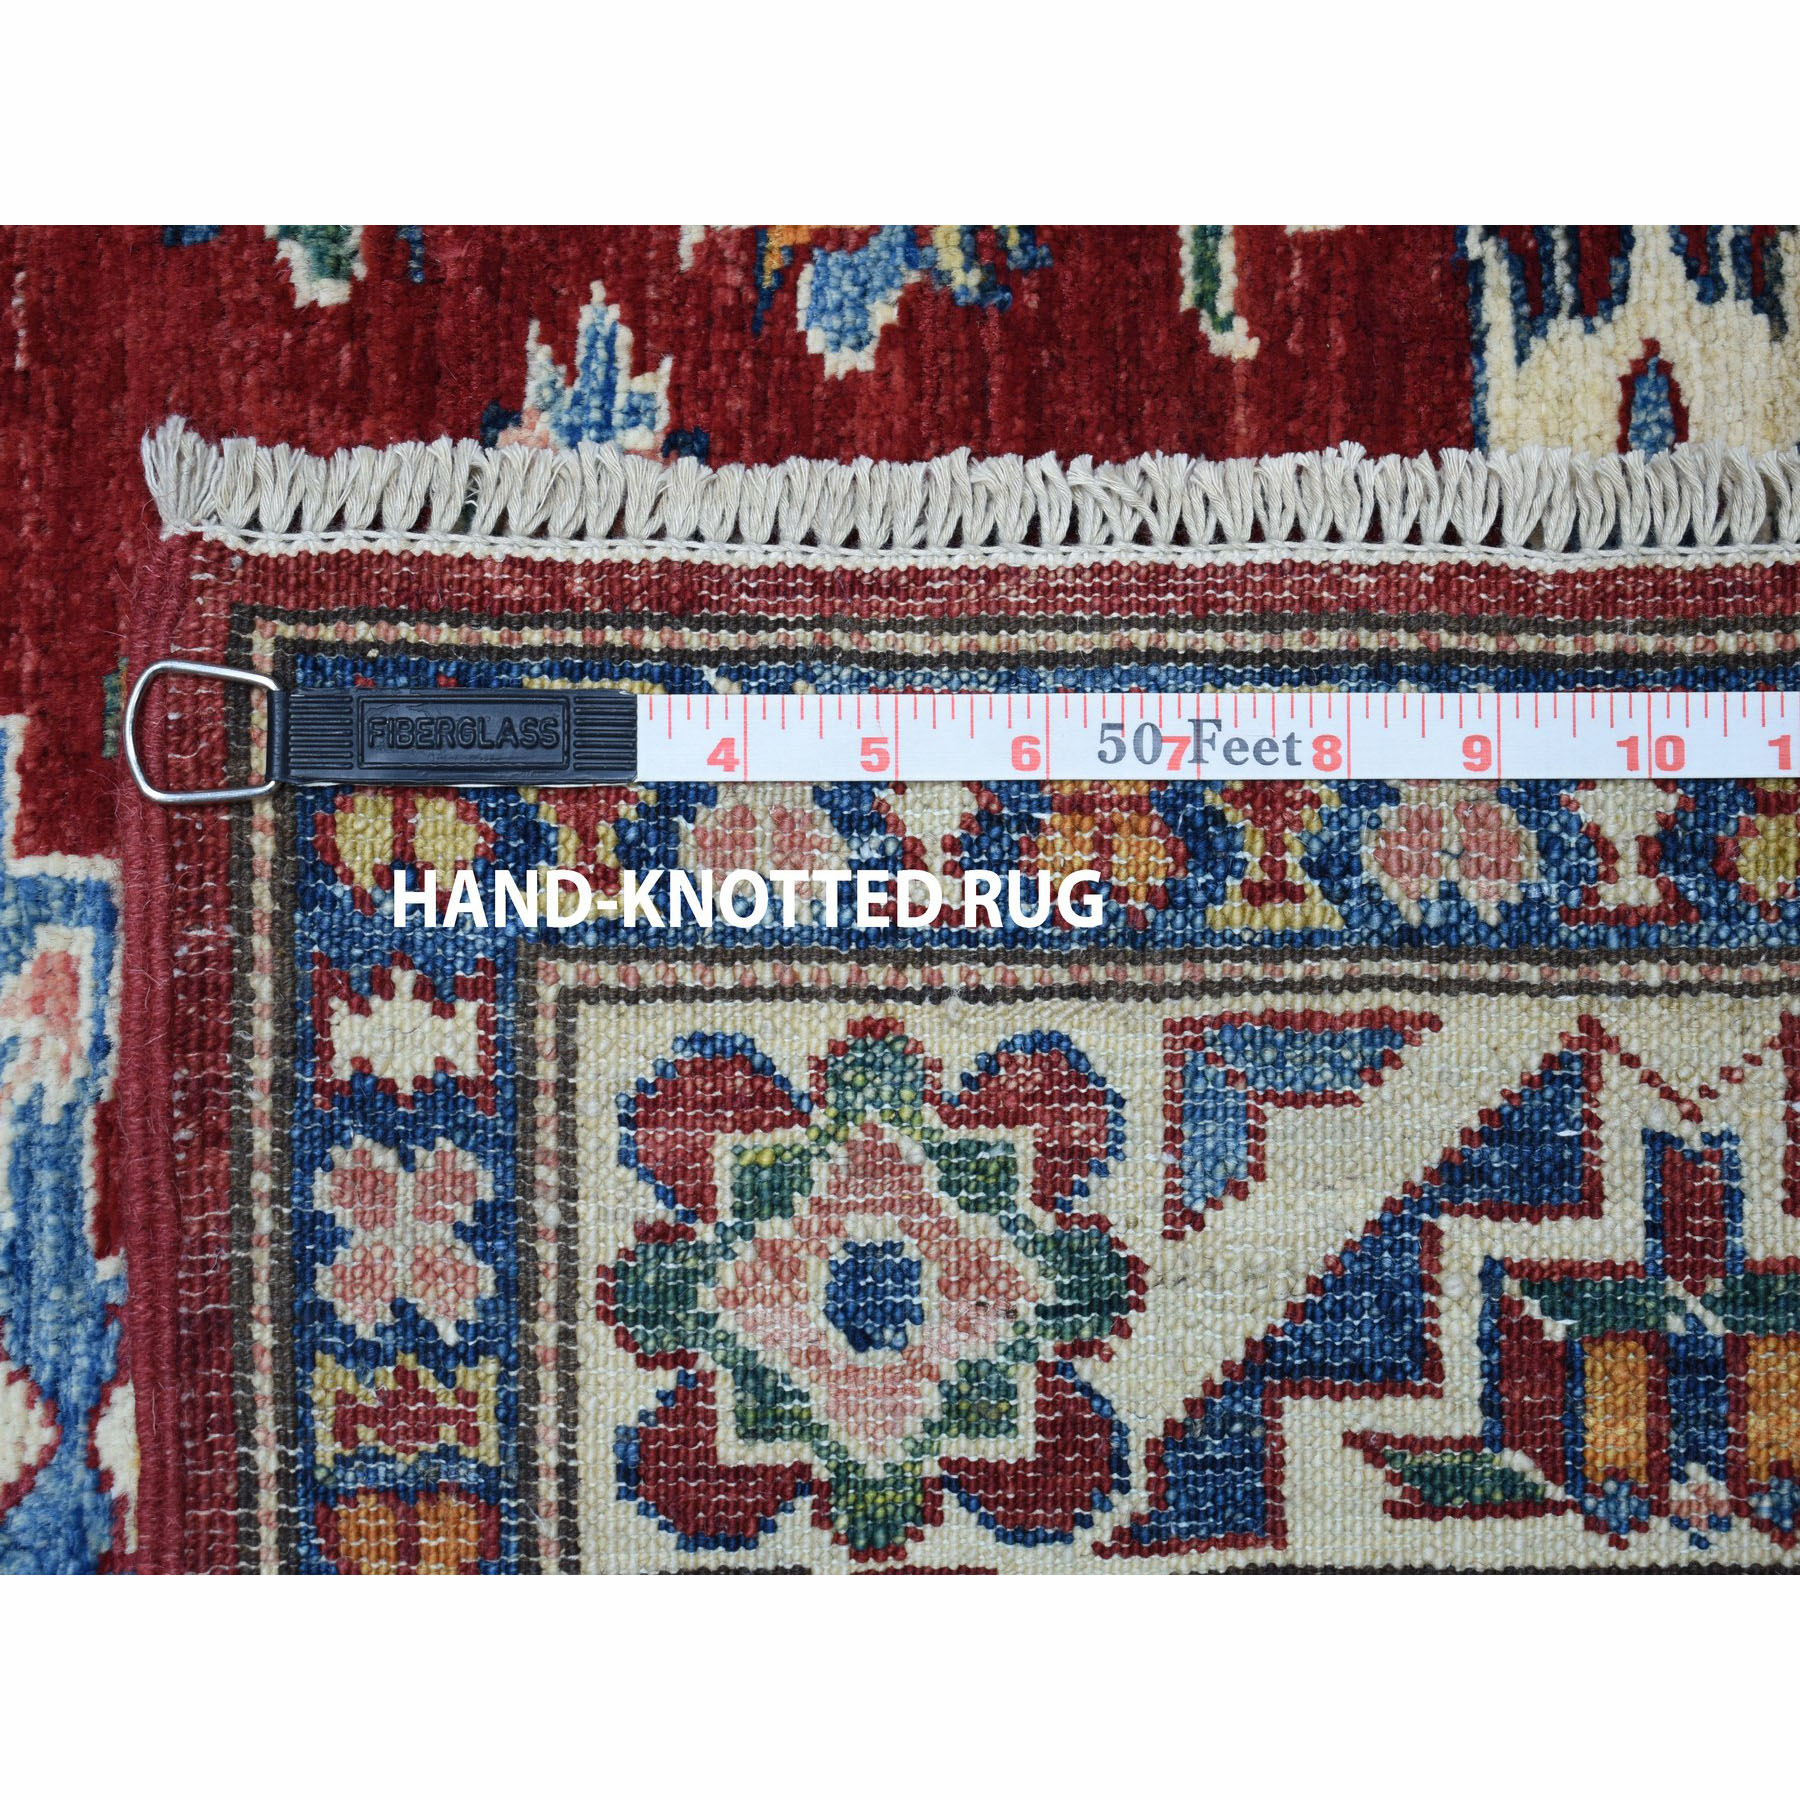 3-2 X4-9  Red Super Kazak Pure Wool Geometric Design Hand-Knotted Oriental Rug 